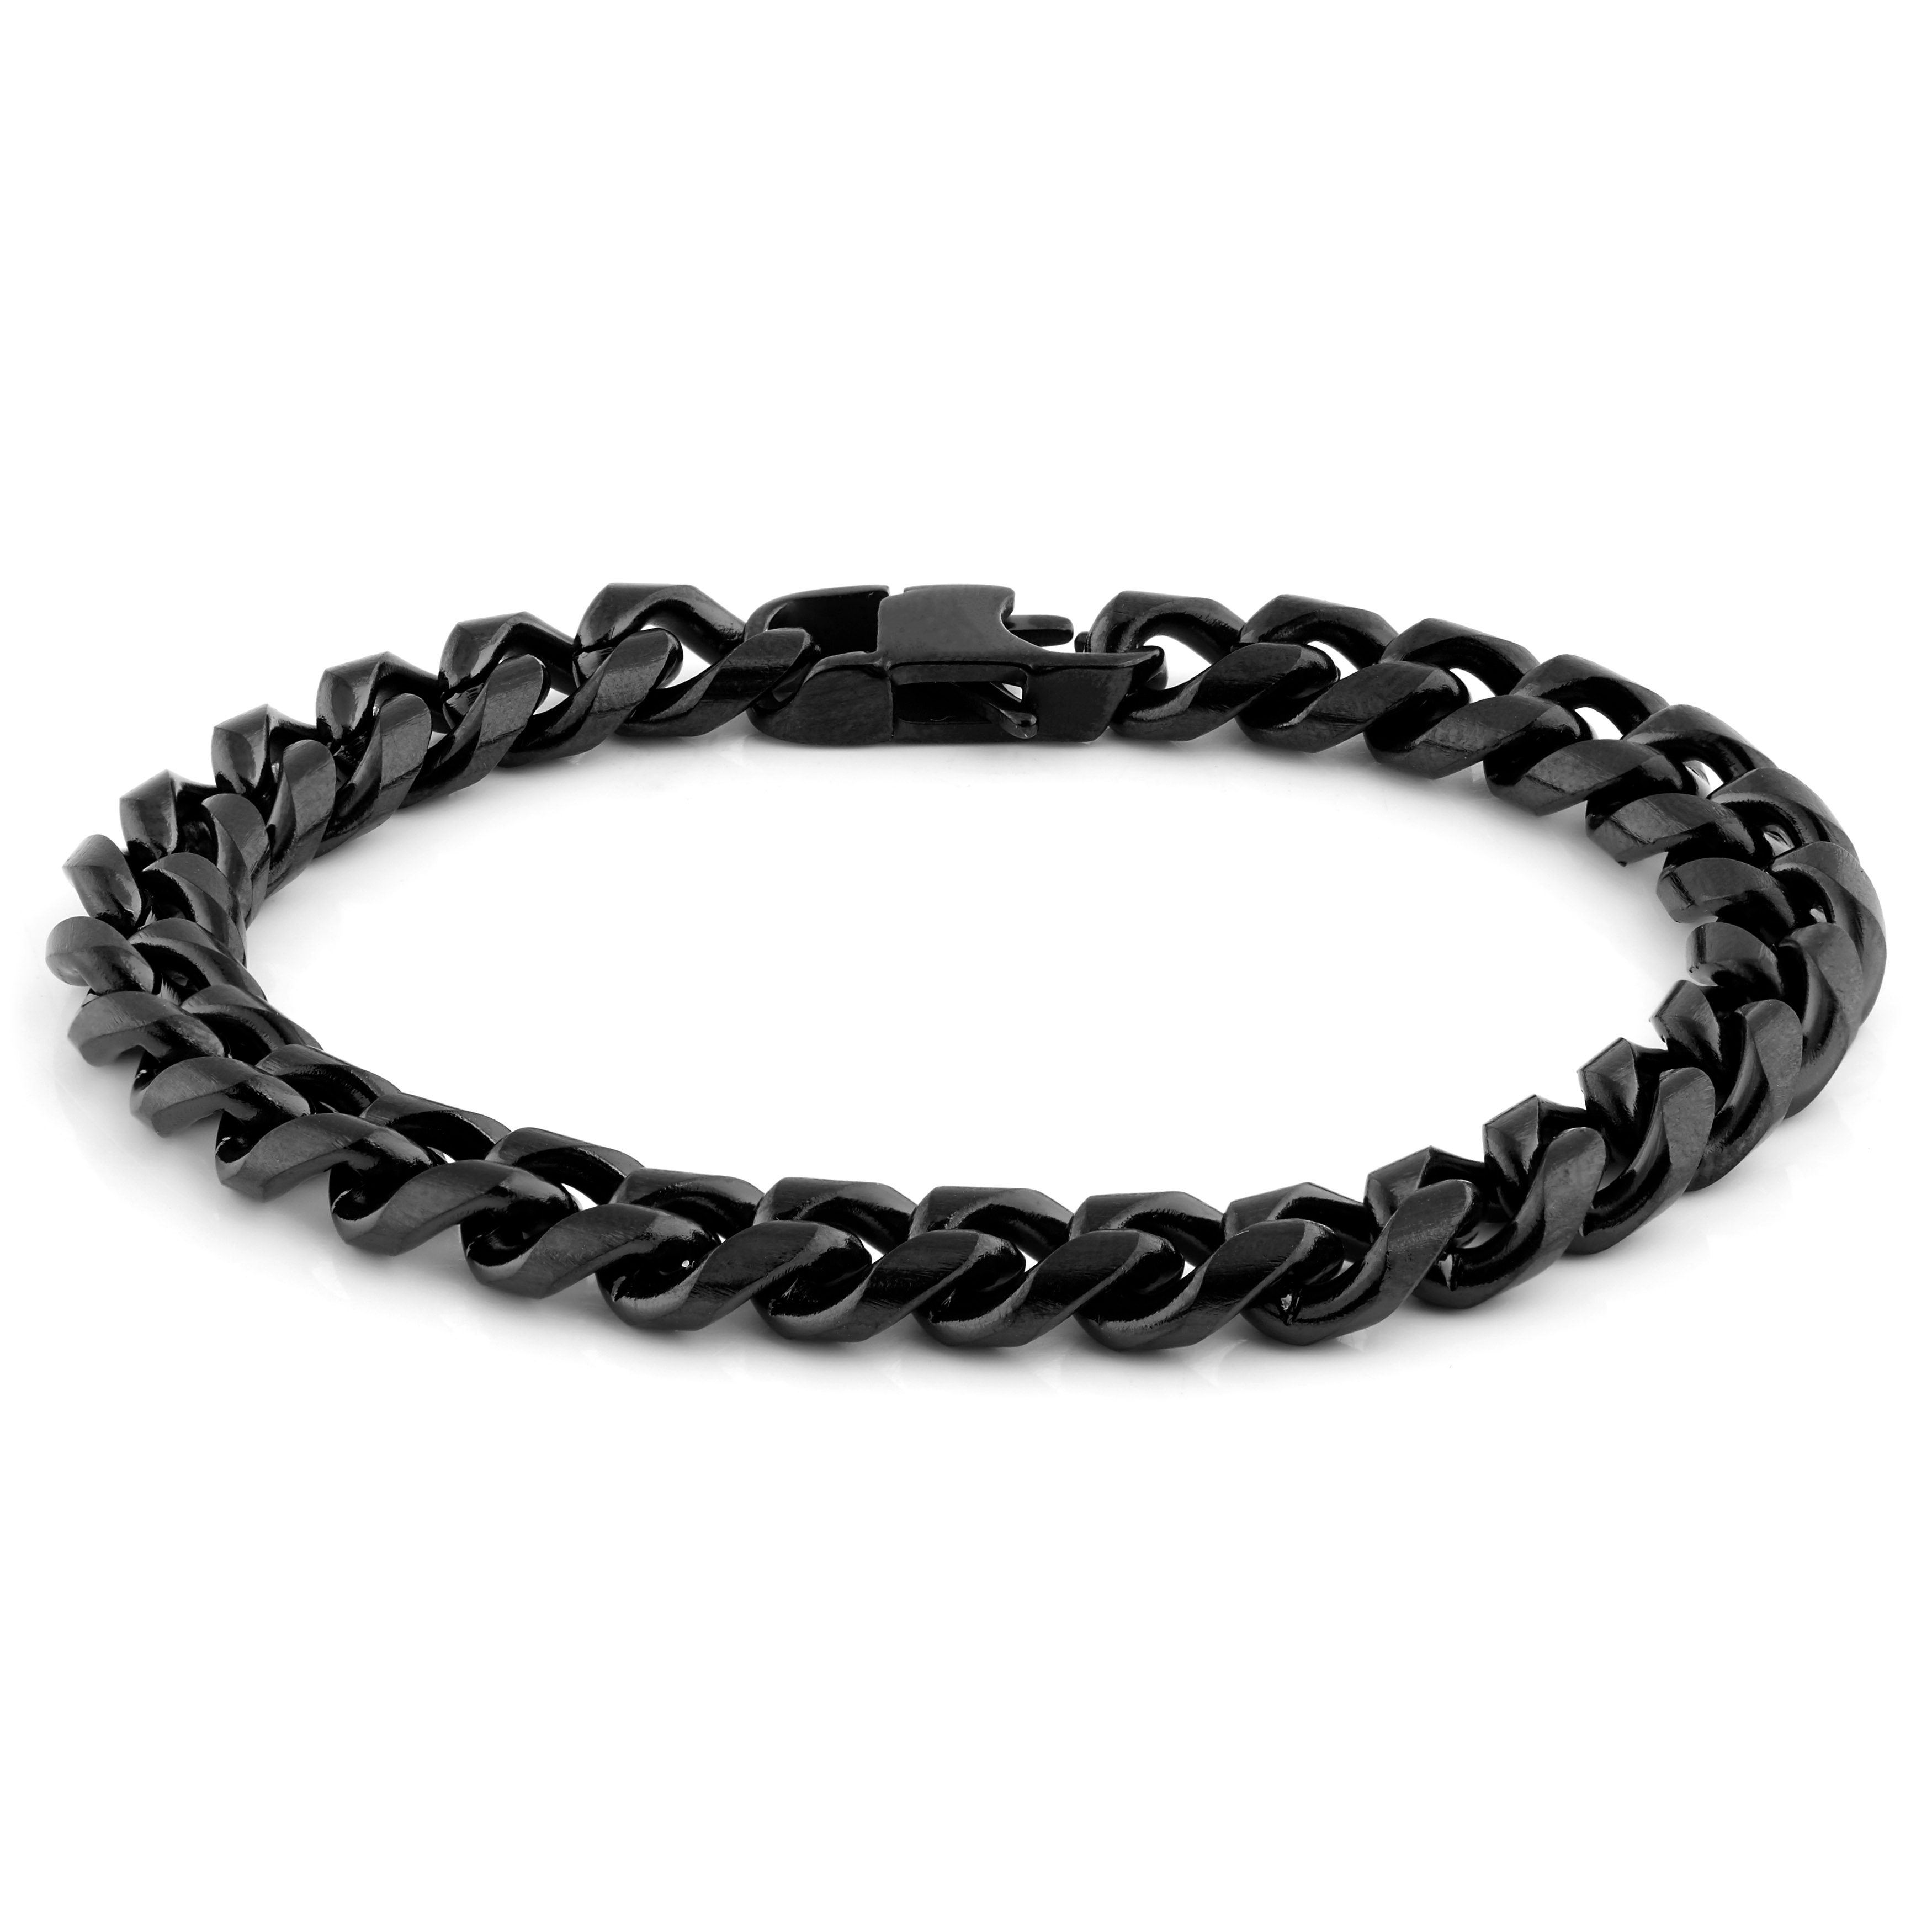 Buy Black Stainless Steel 8mm Diamond Curb Chain Bracelet Online - Inox  Jewelry India